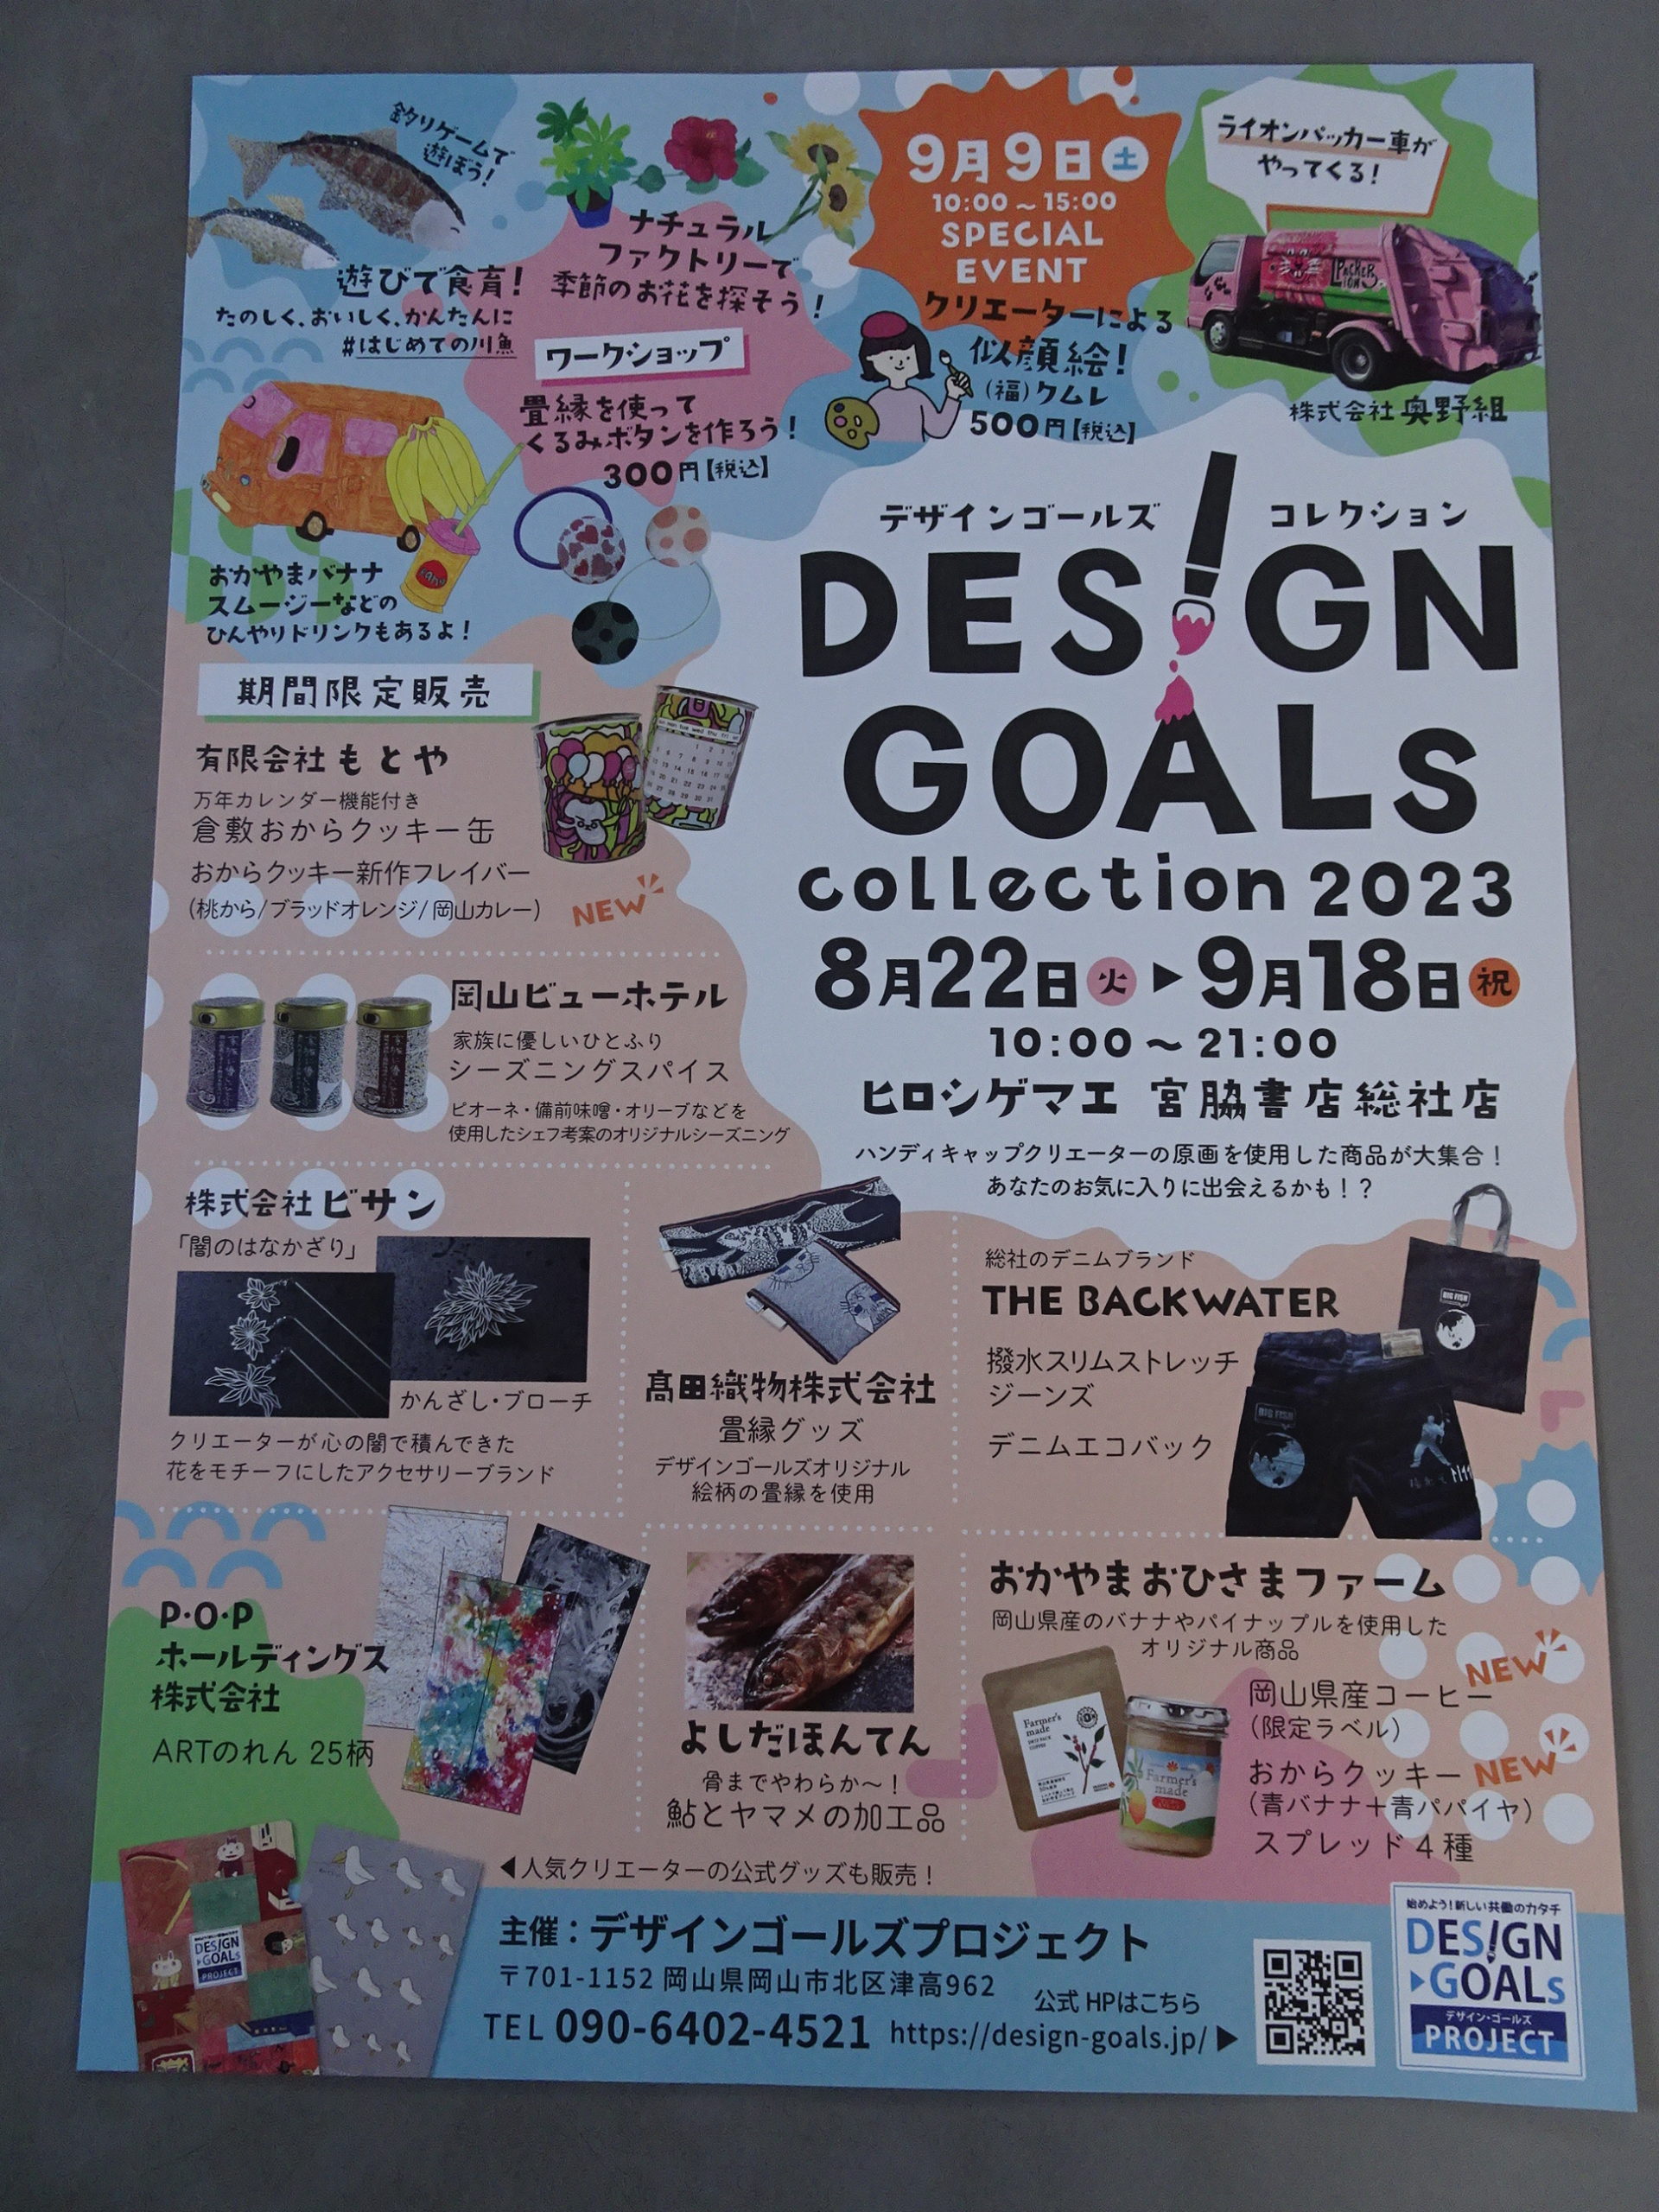 DESIGN GOALs collection 2023 開催